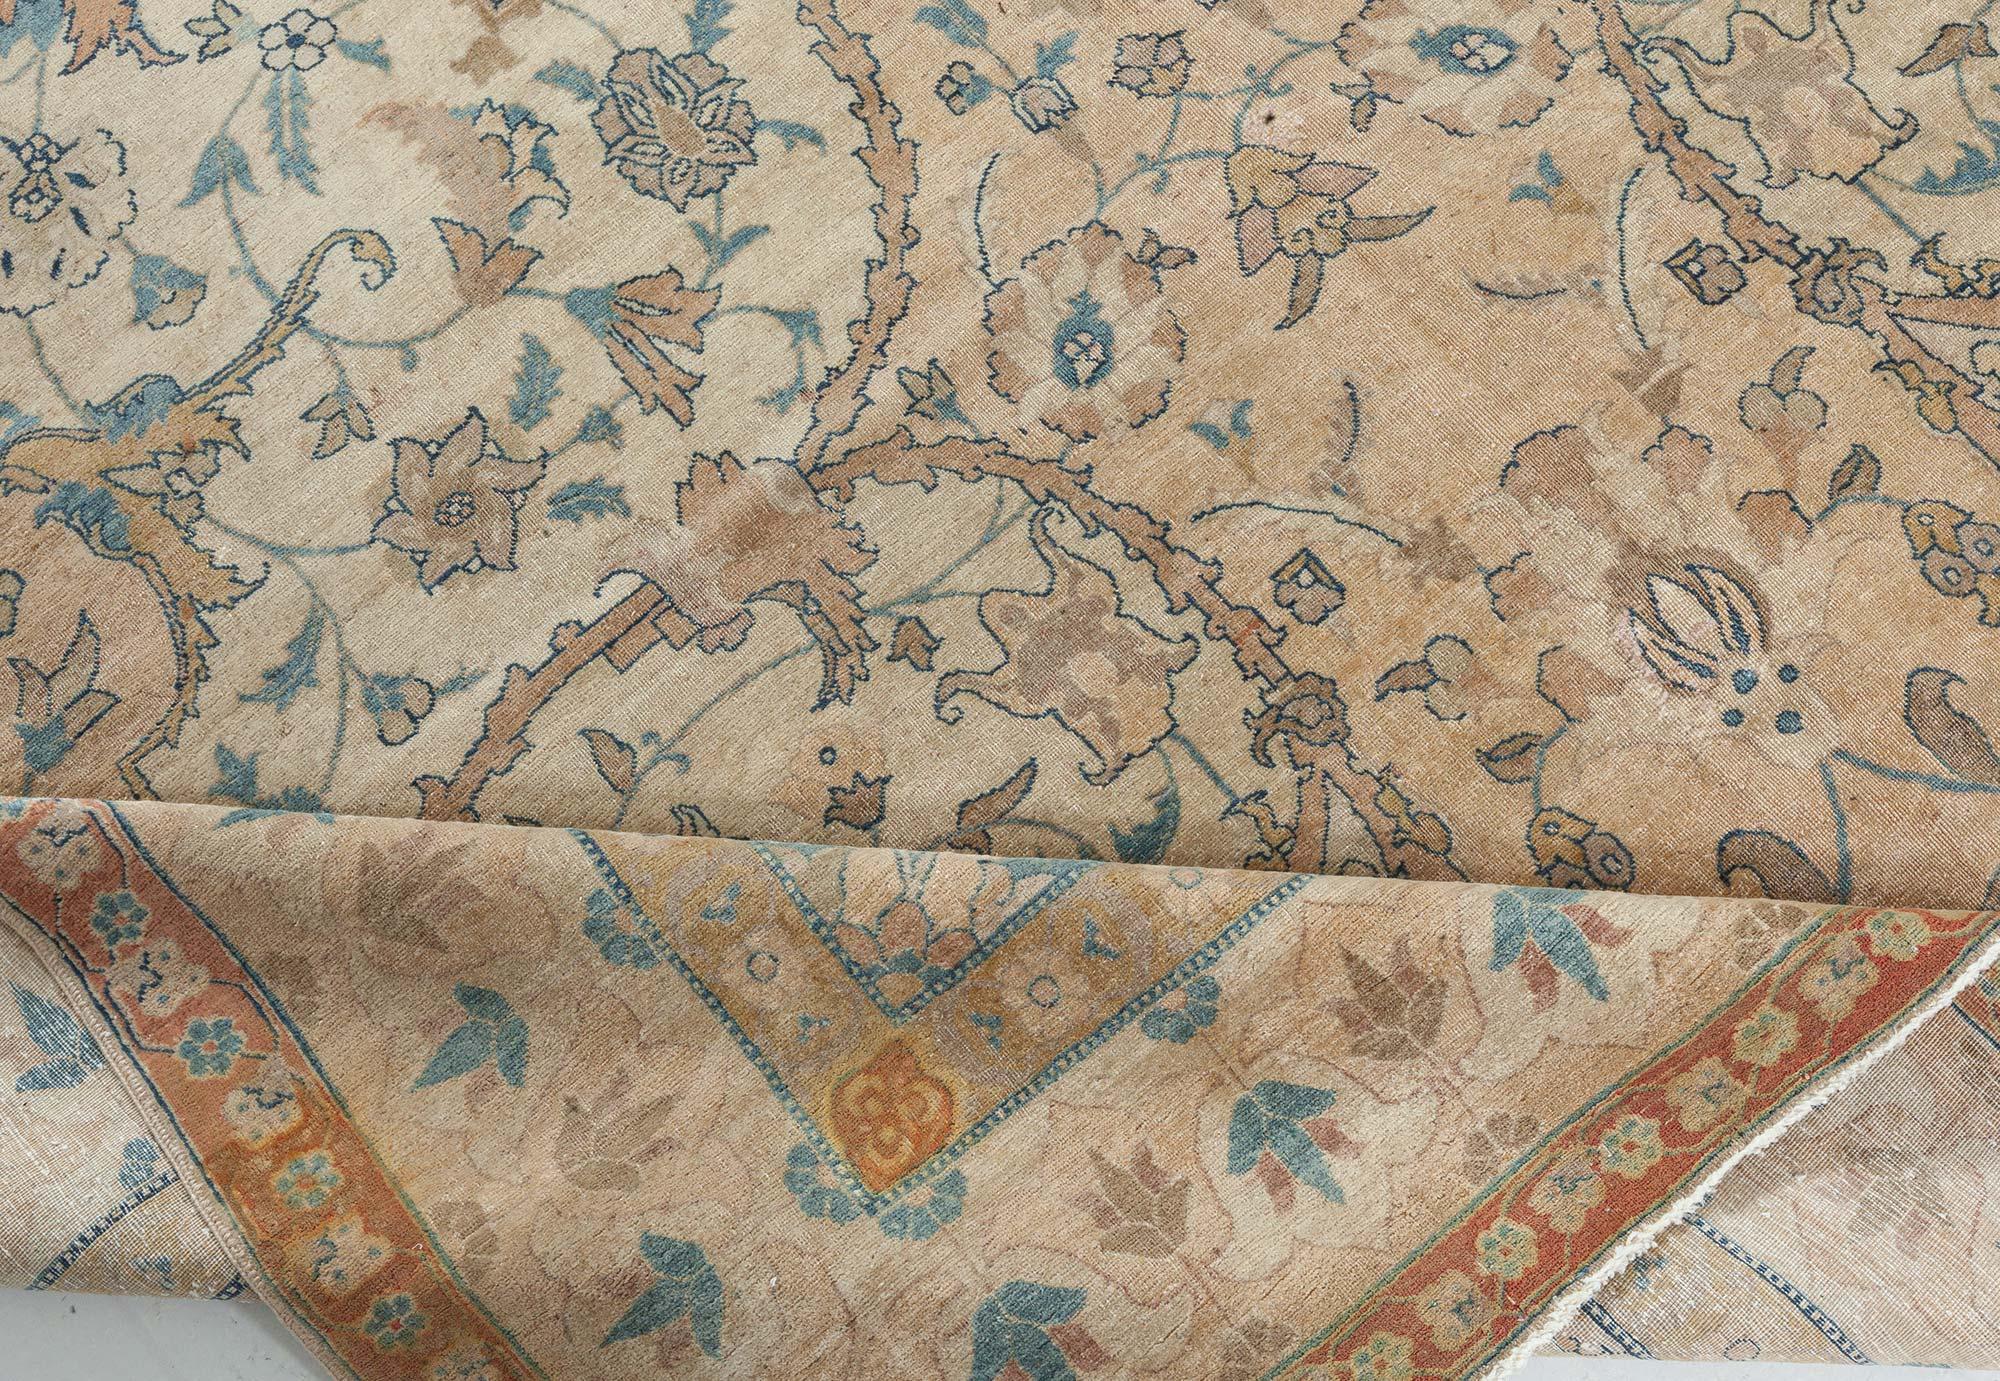 Antique flower Medallion Persian Tabriz wool rug
Size: 9'6